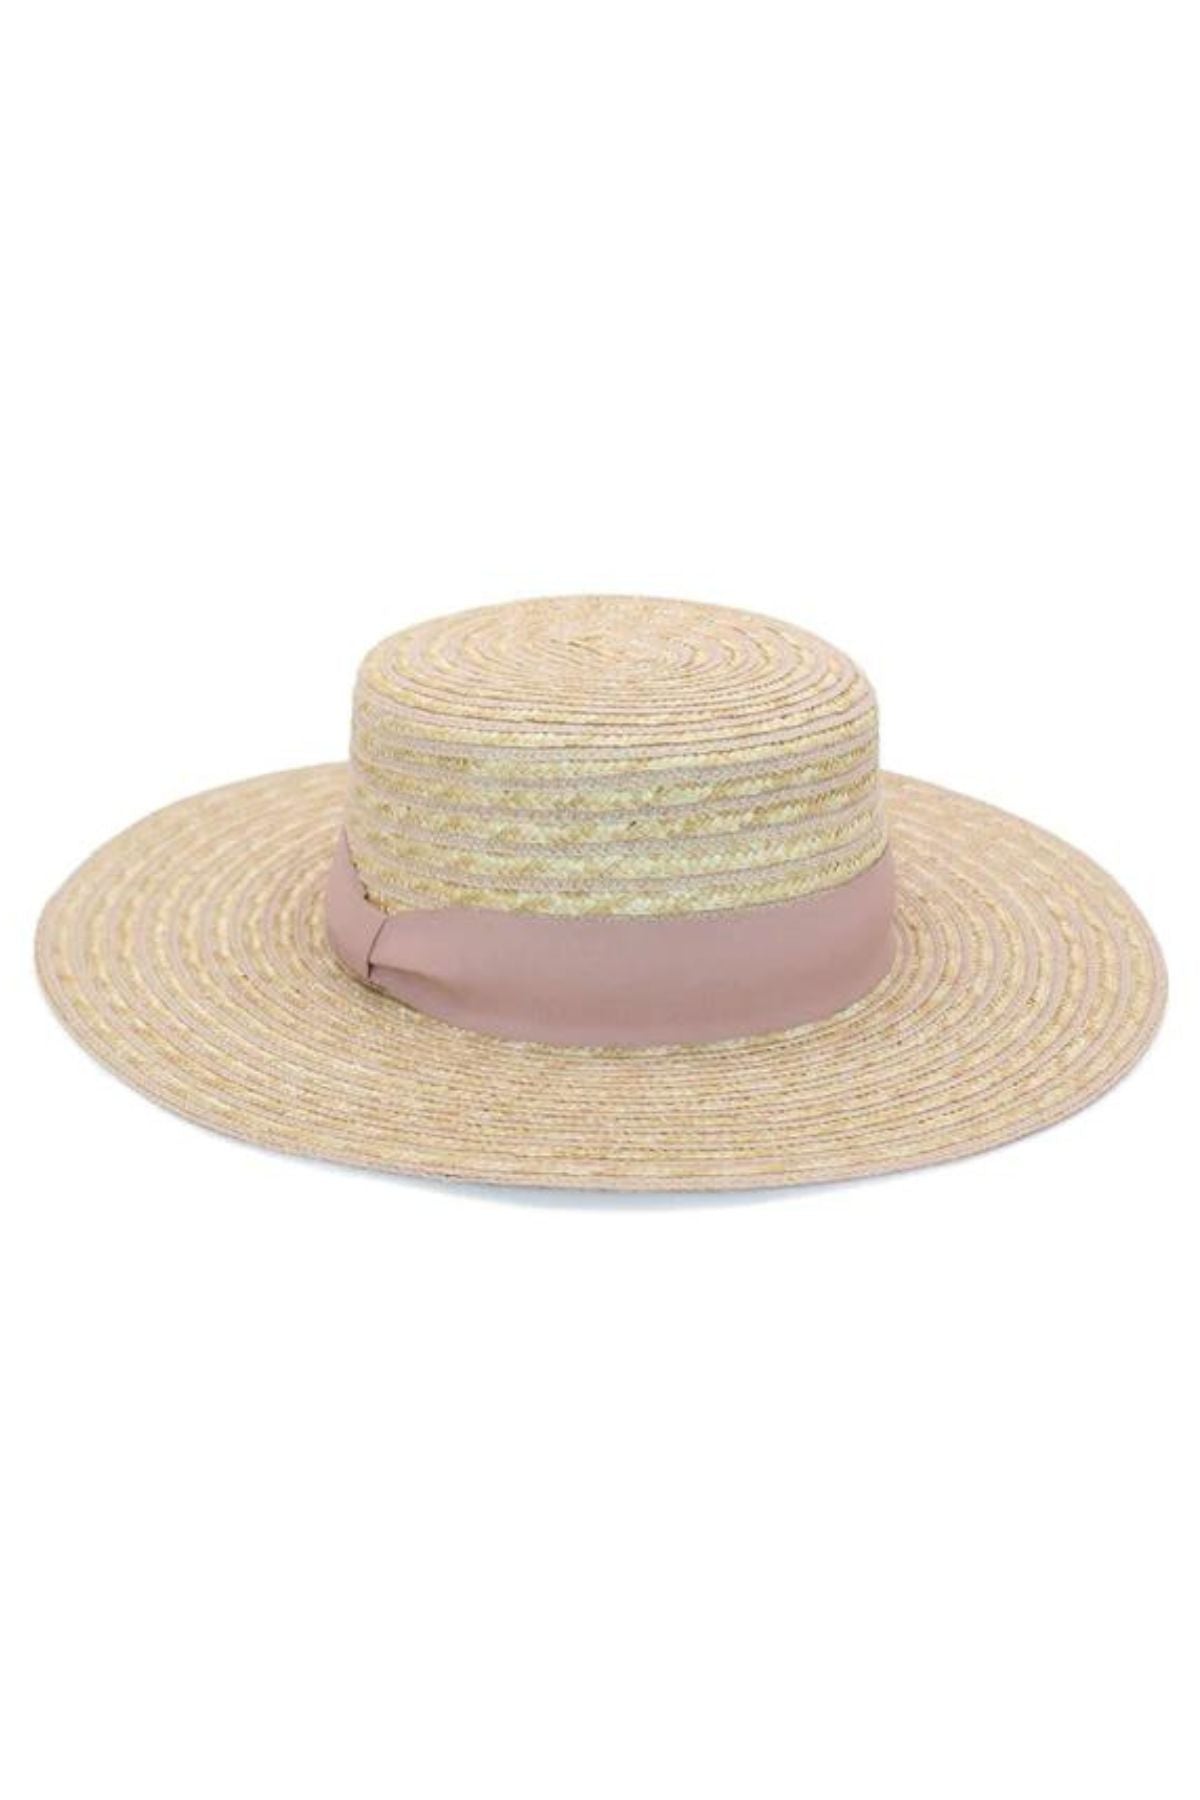 Morgan and Taylor MORGAN & TAYLOR Harlow Boater Hat (Pink) - 3_1de8b24a-18ed-4052-b65f-54af20acd42b.jpg